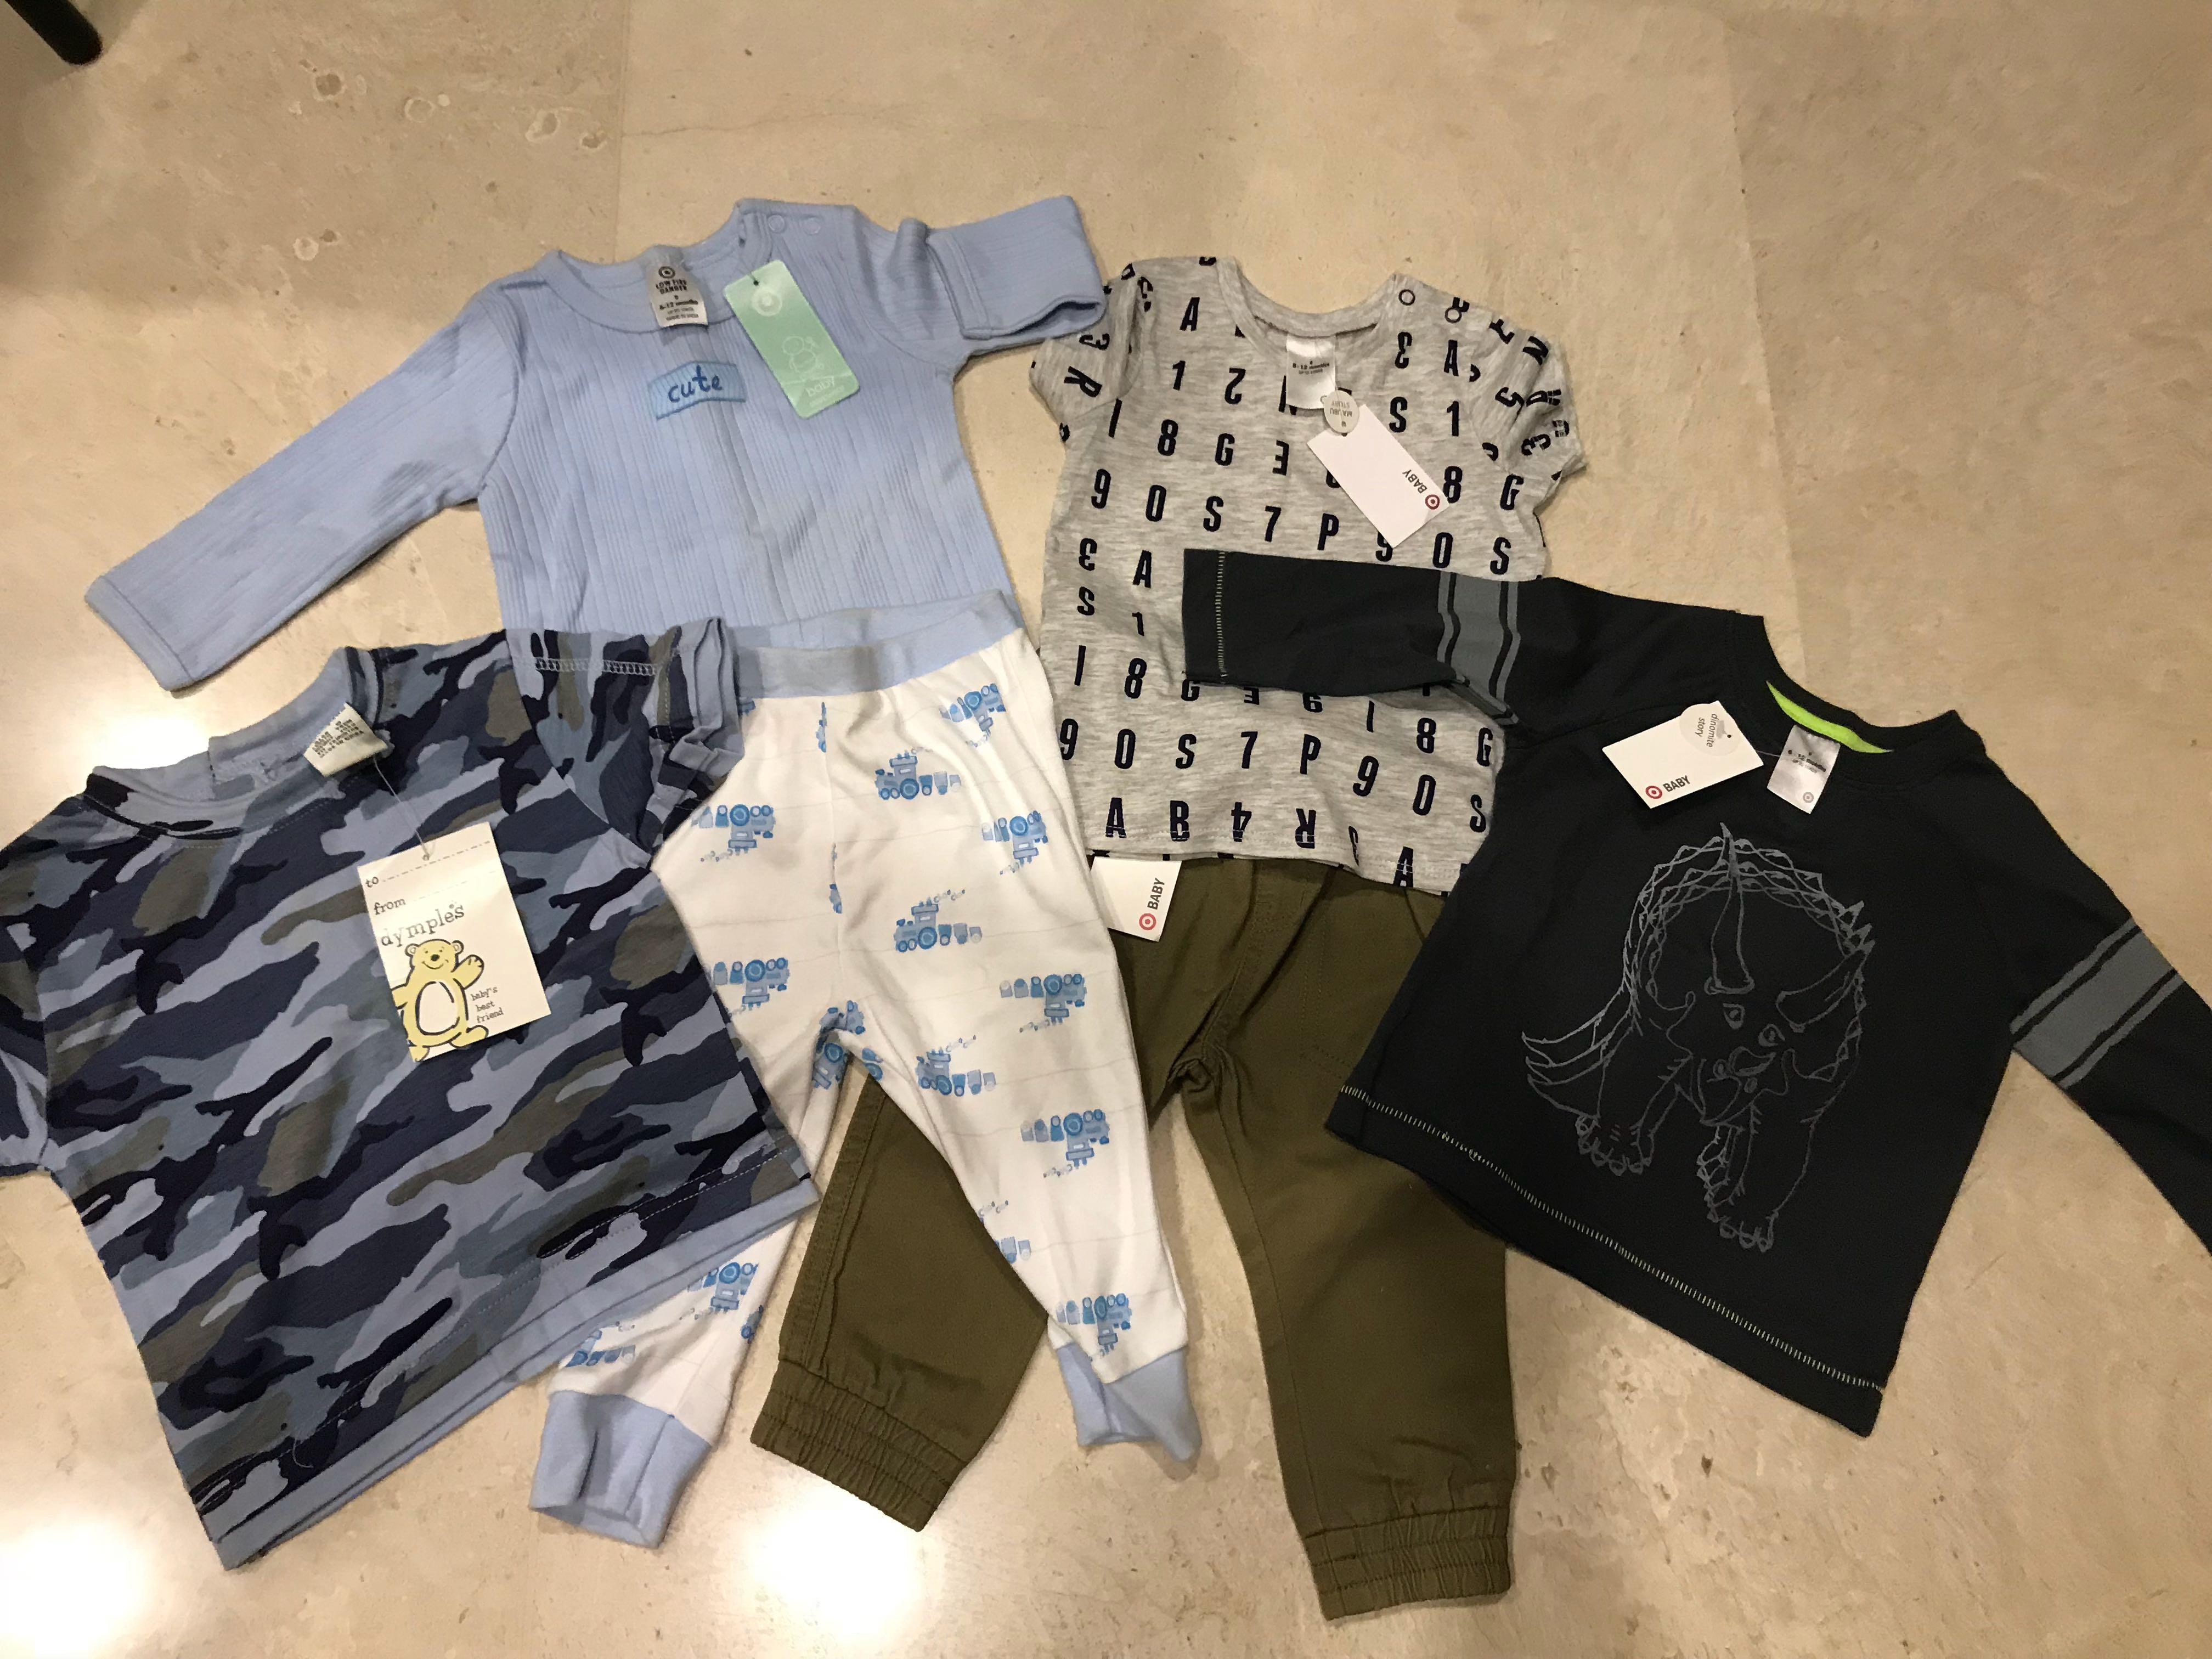 baby clothes target australia